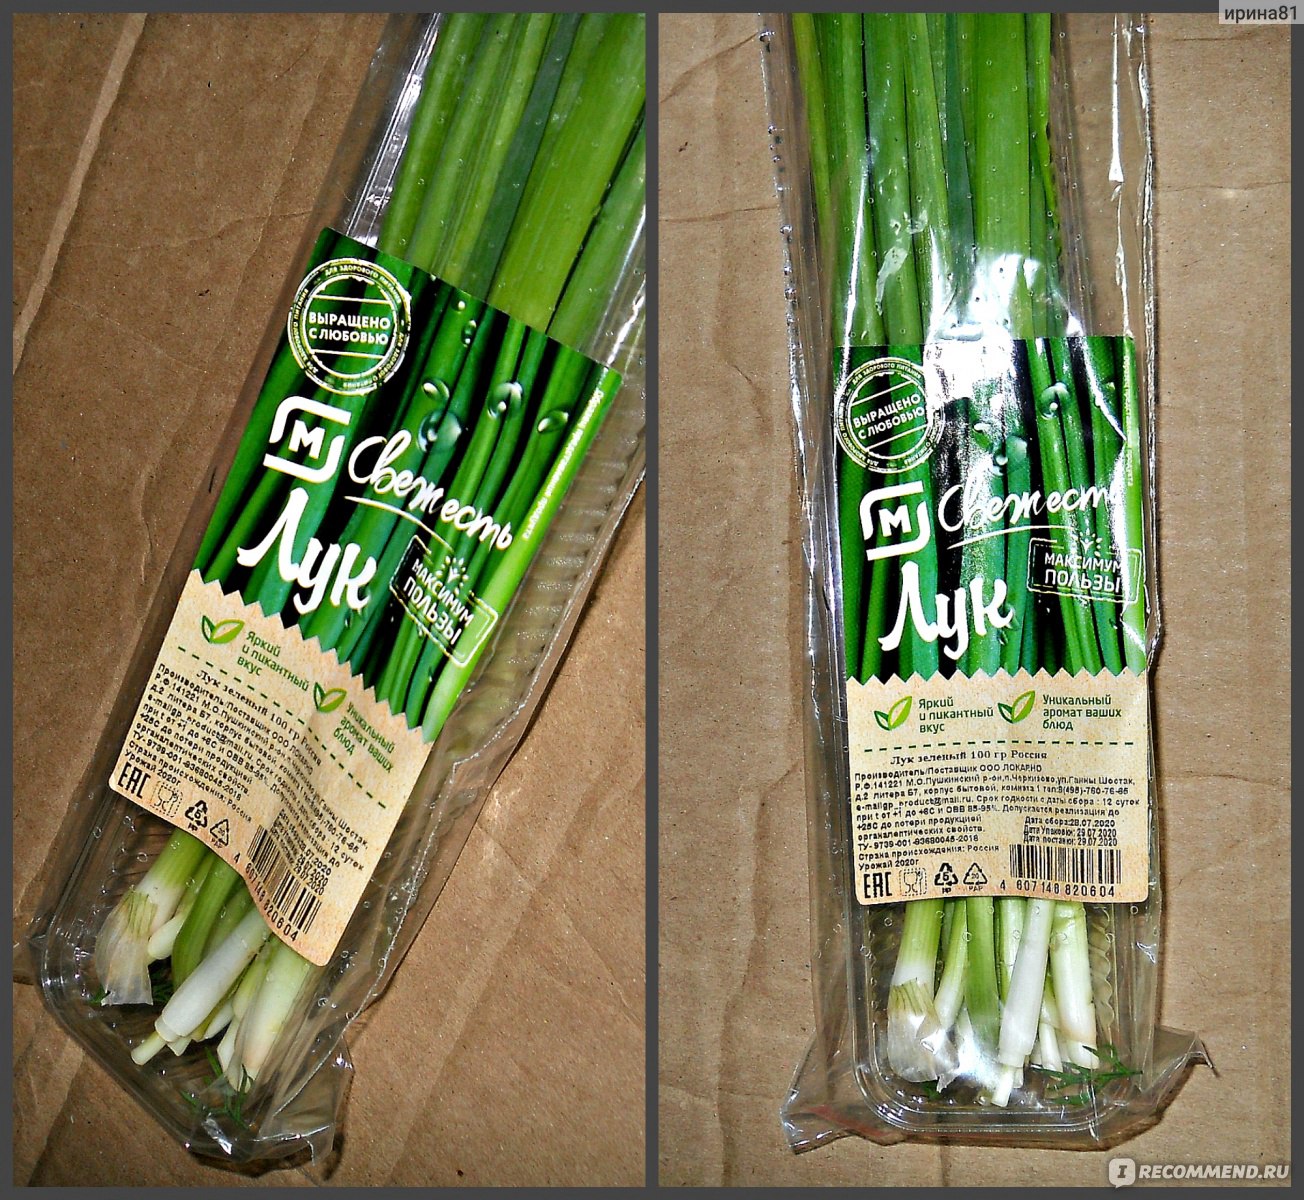 Вкусвилл лук. Лук 100 грамм зеленый Пятерочка. Фасованный зеленый лук. Зеленый лук в упаковке.